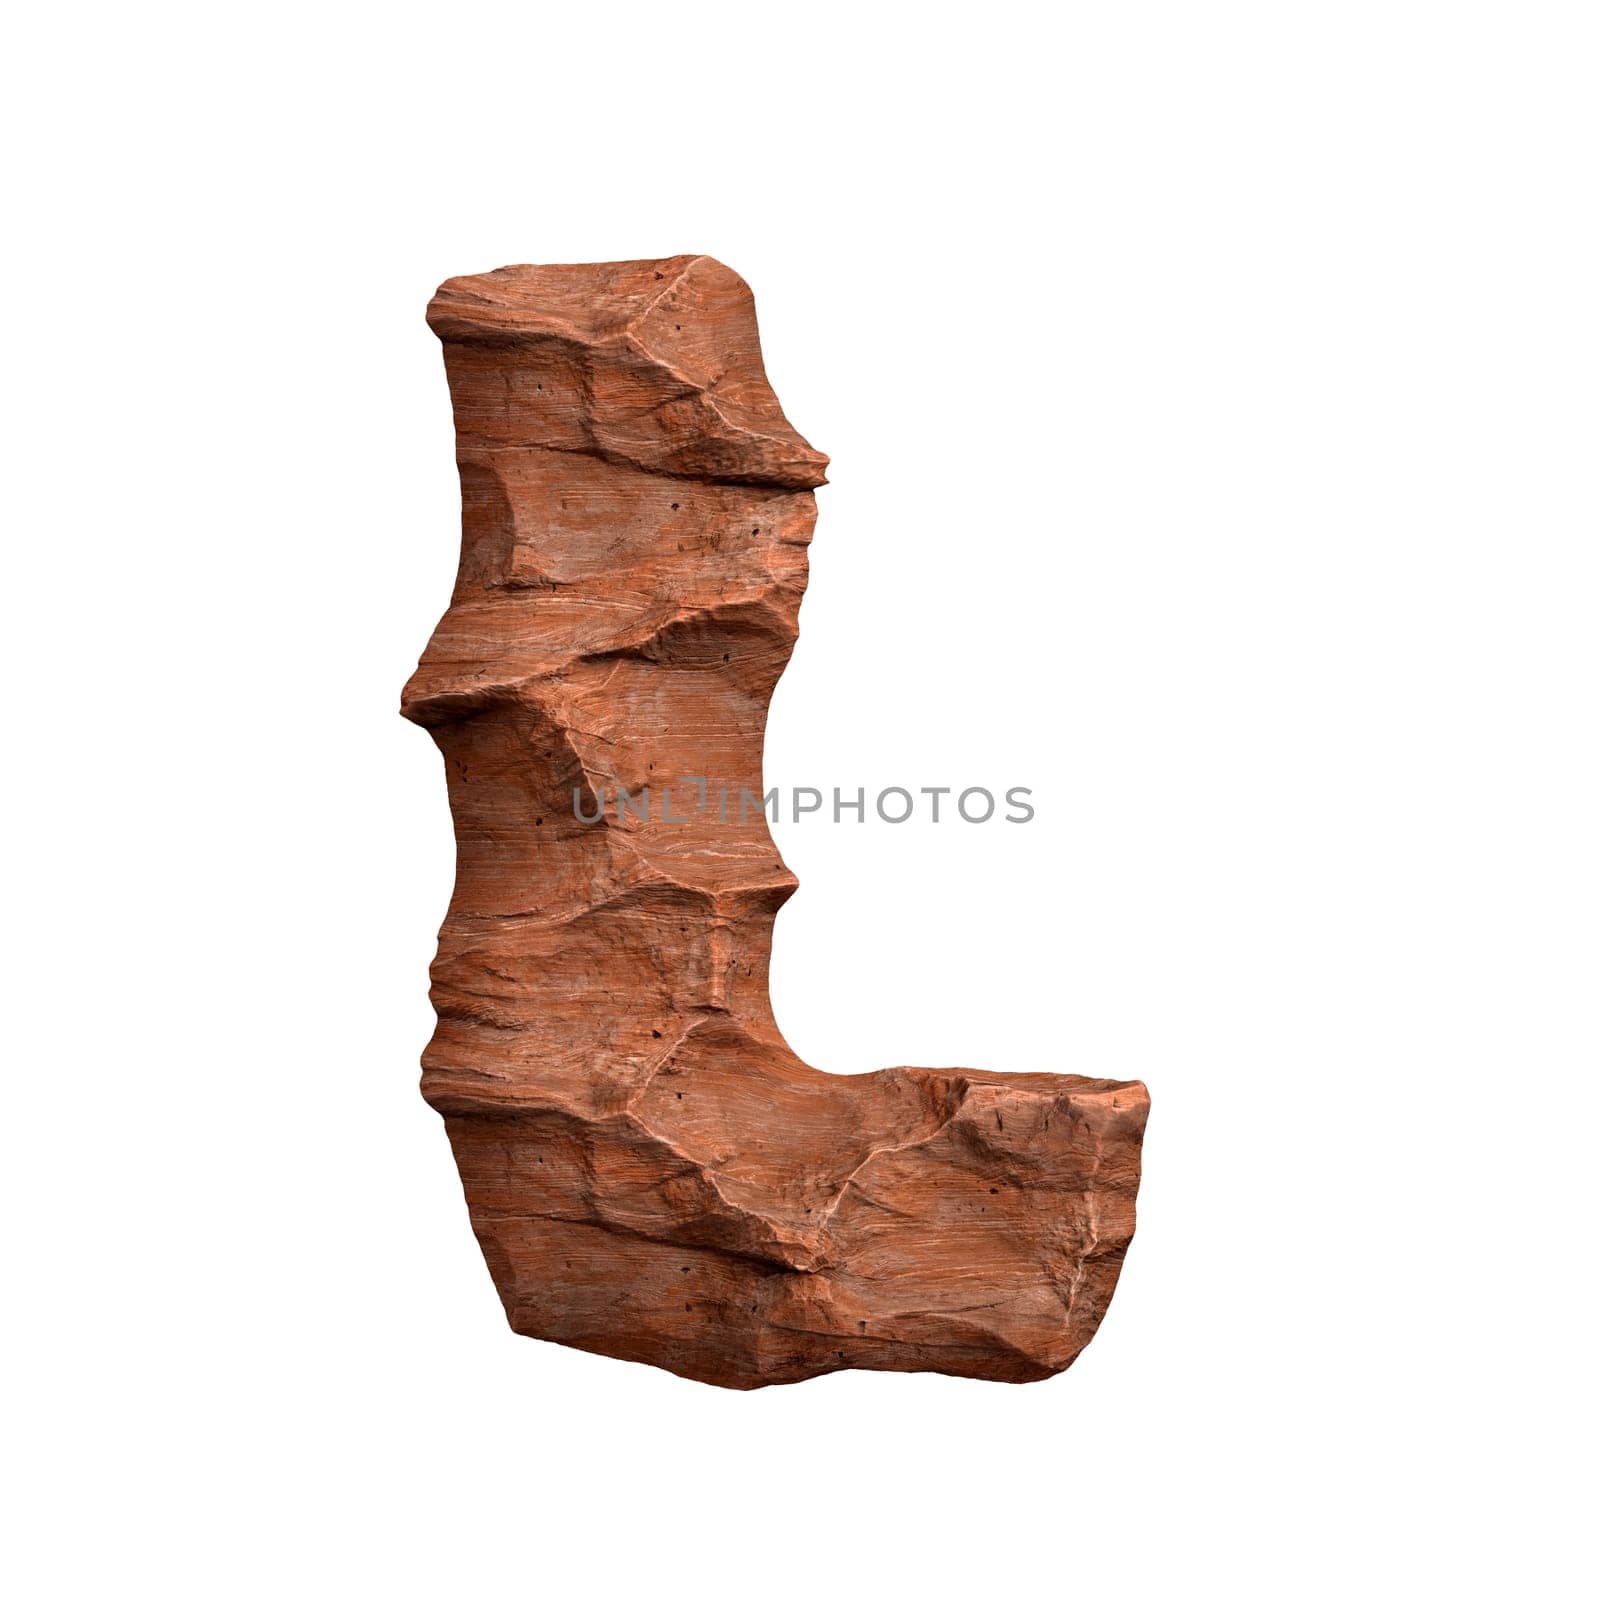 Desert sandstone letter L - Capital 3d red rock font - suitable for Arizona, geology or desert related subjects by chrisroll